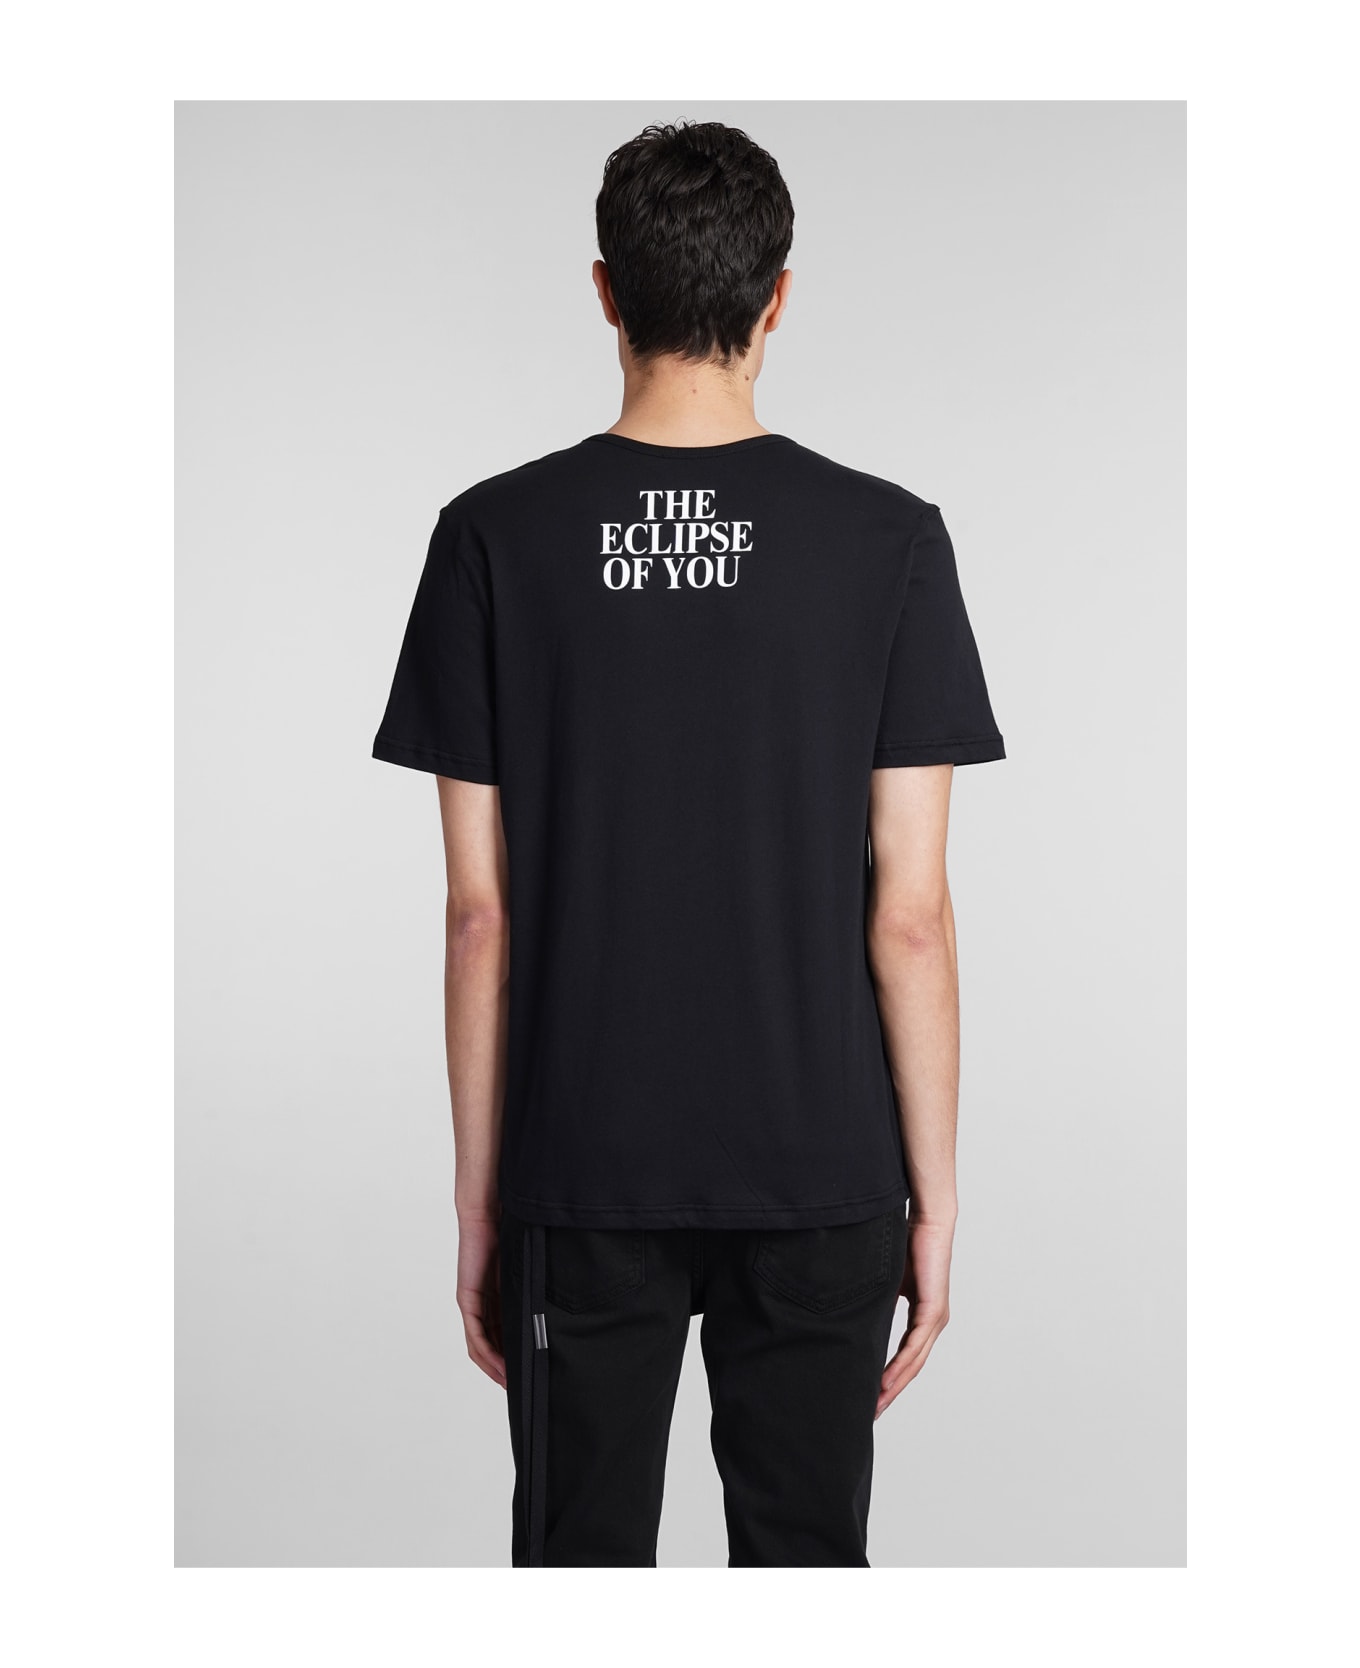 Ann Demeulemeester T-shirt In Black Cotton - black